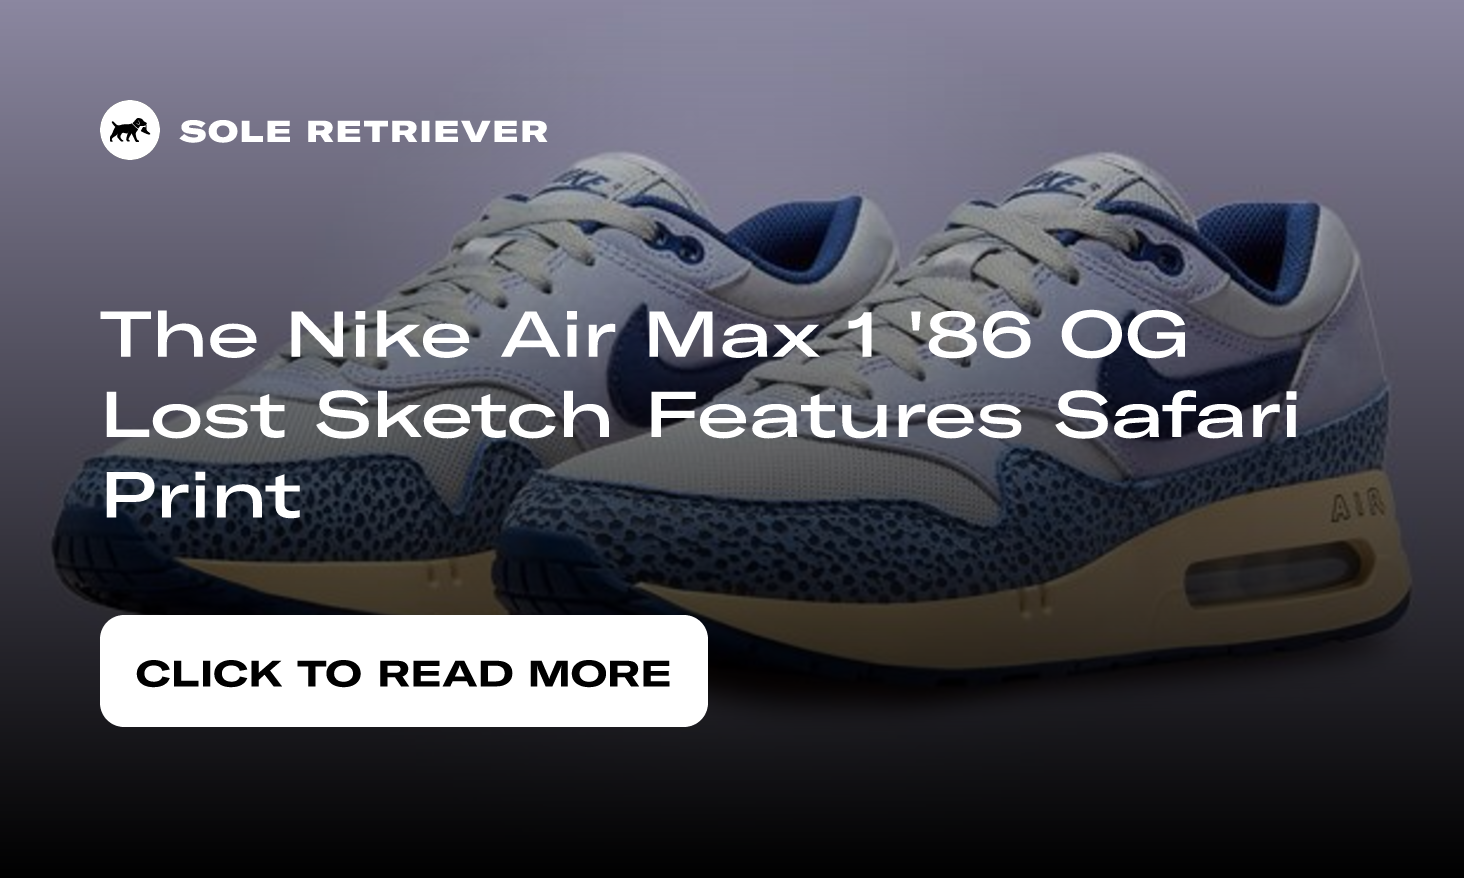 Nike Air Max 1 '86 Lost Sketch